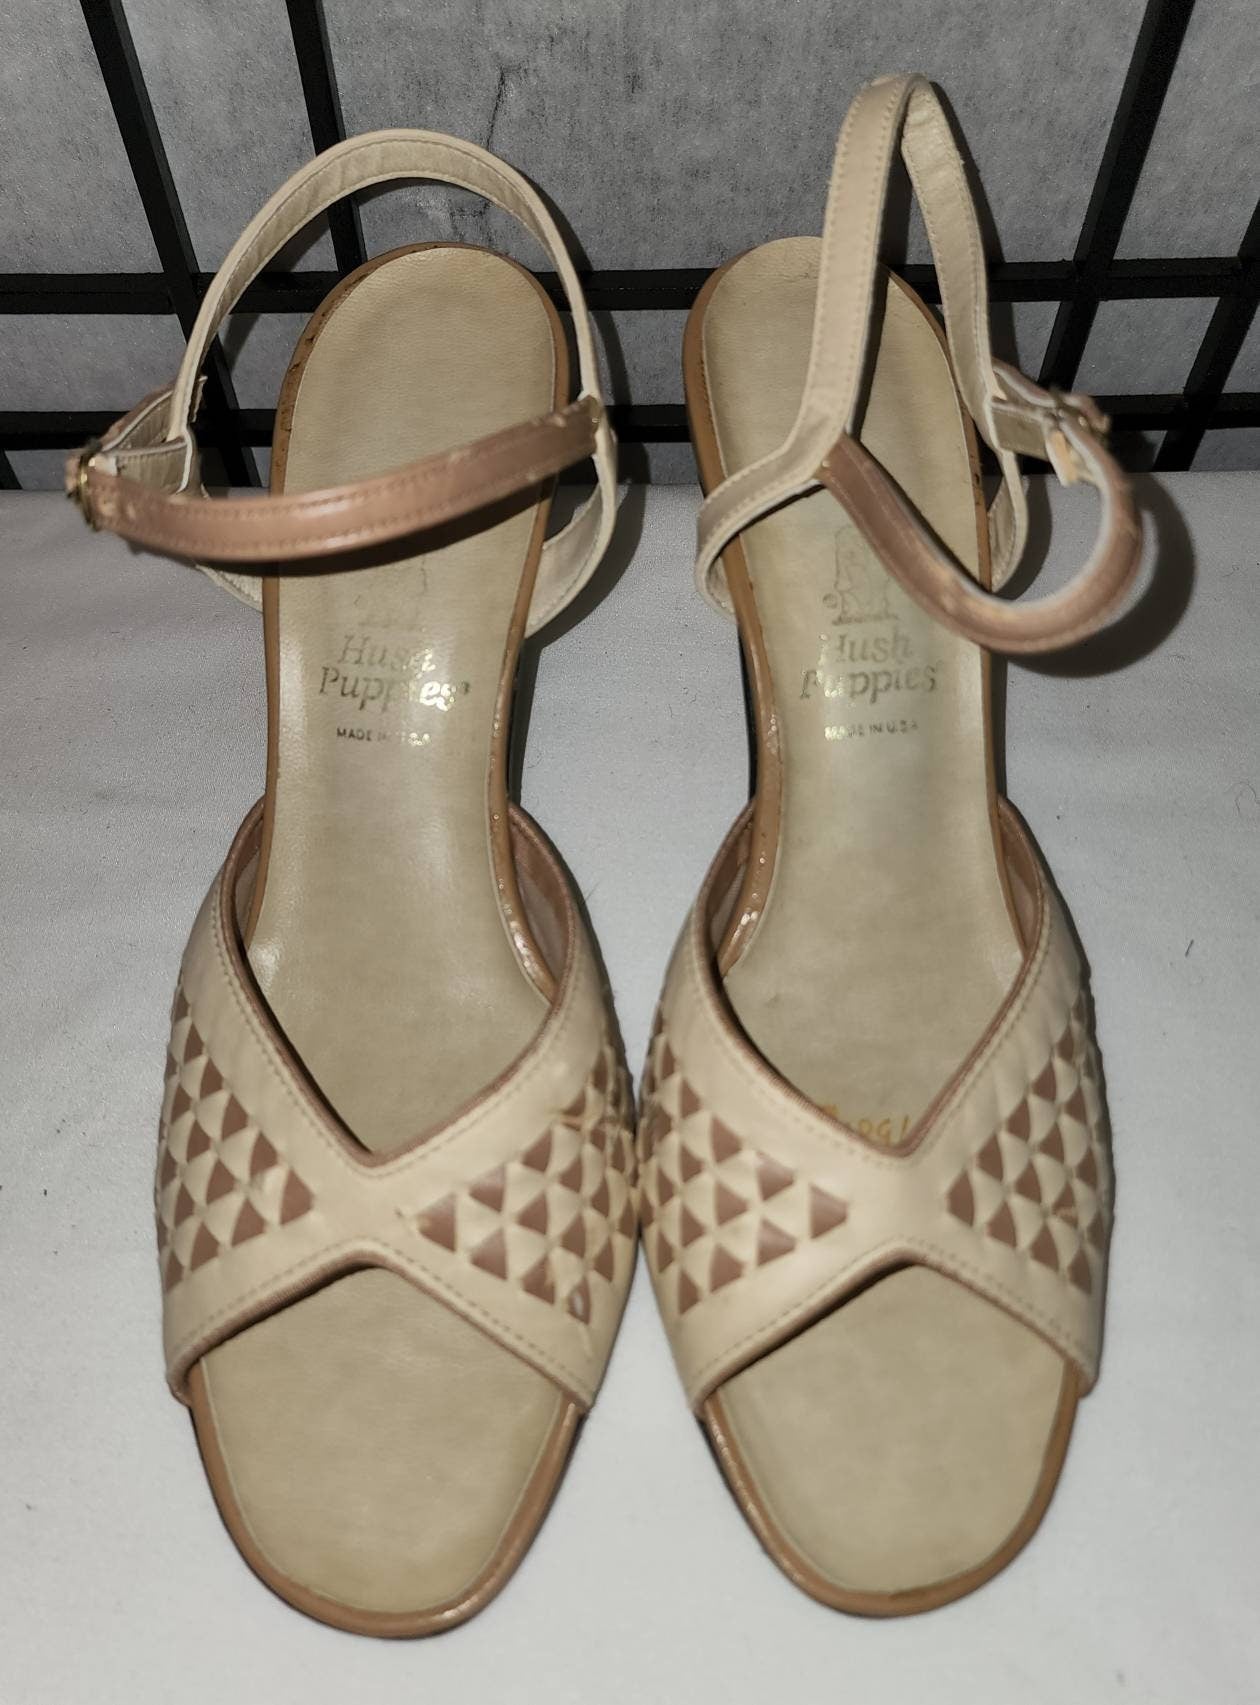 Vintage 1980s Heels Bone Tan Leather High Heel Hush Puppies Stiletto Sandals Boho 8 M